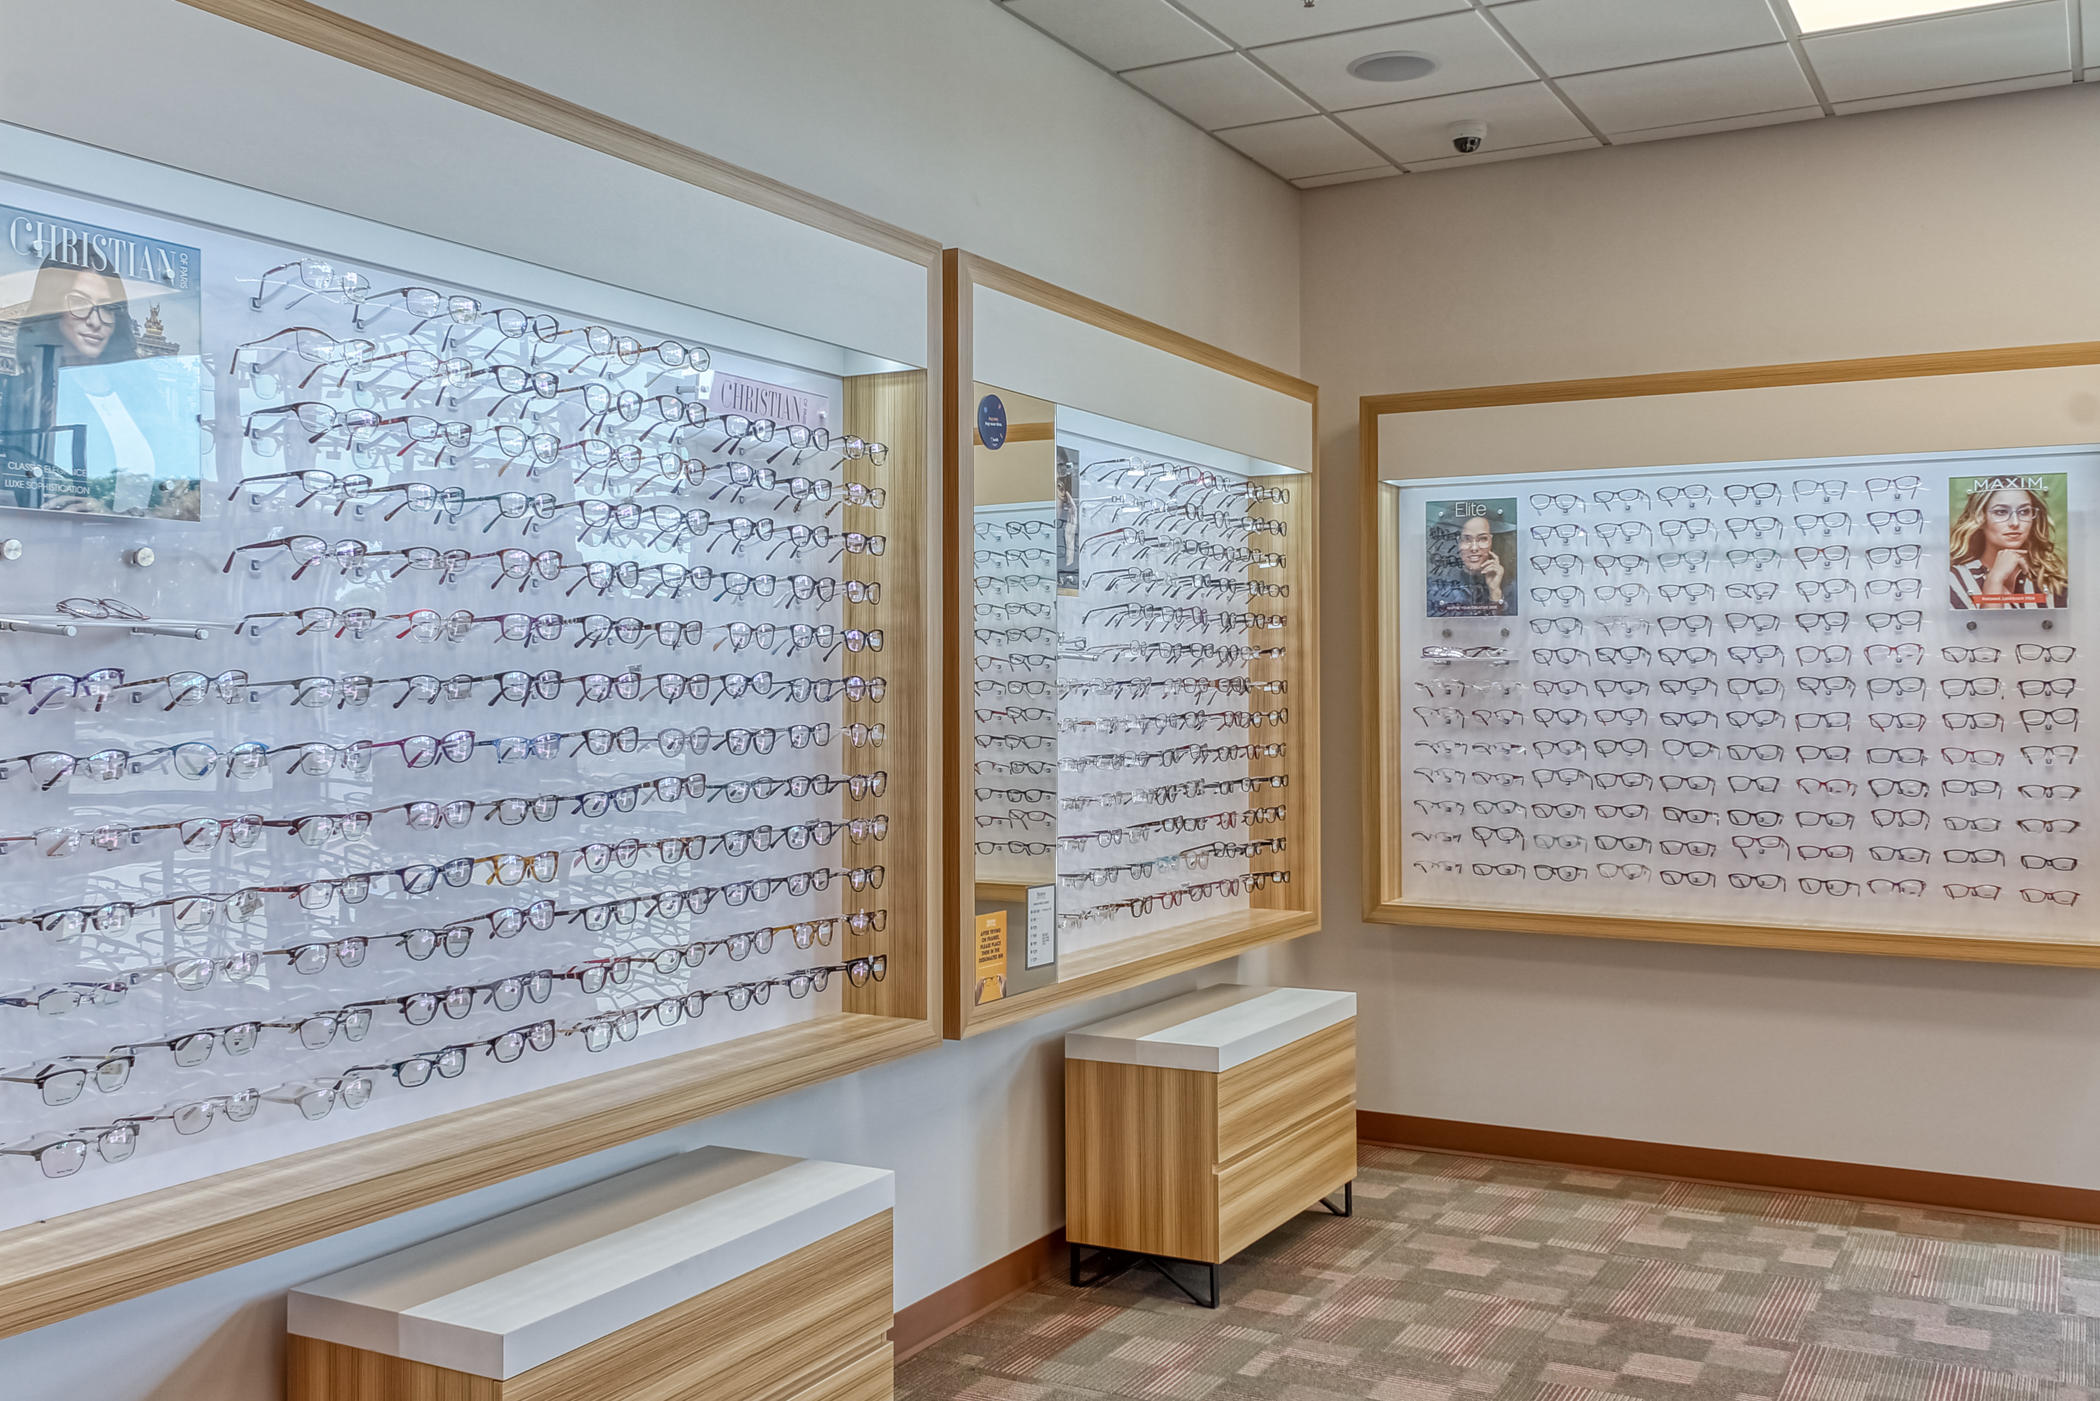 Eyeglasses for sale at Stanton Optical store in Albuquerque, NM 87105